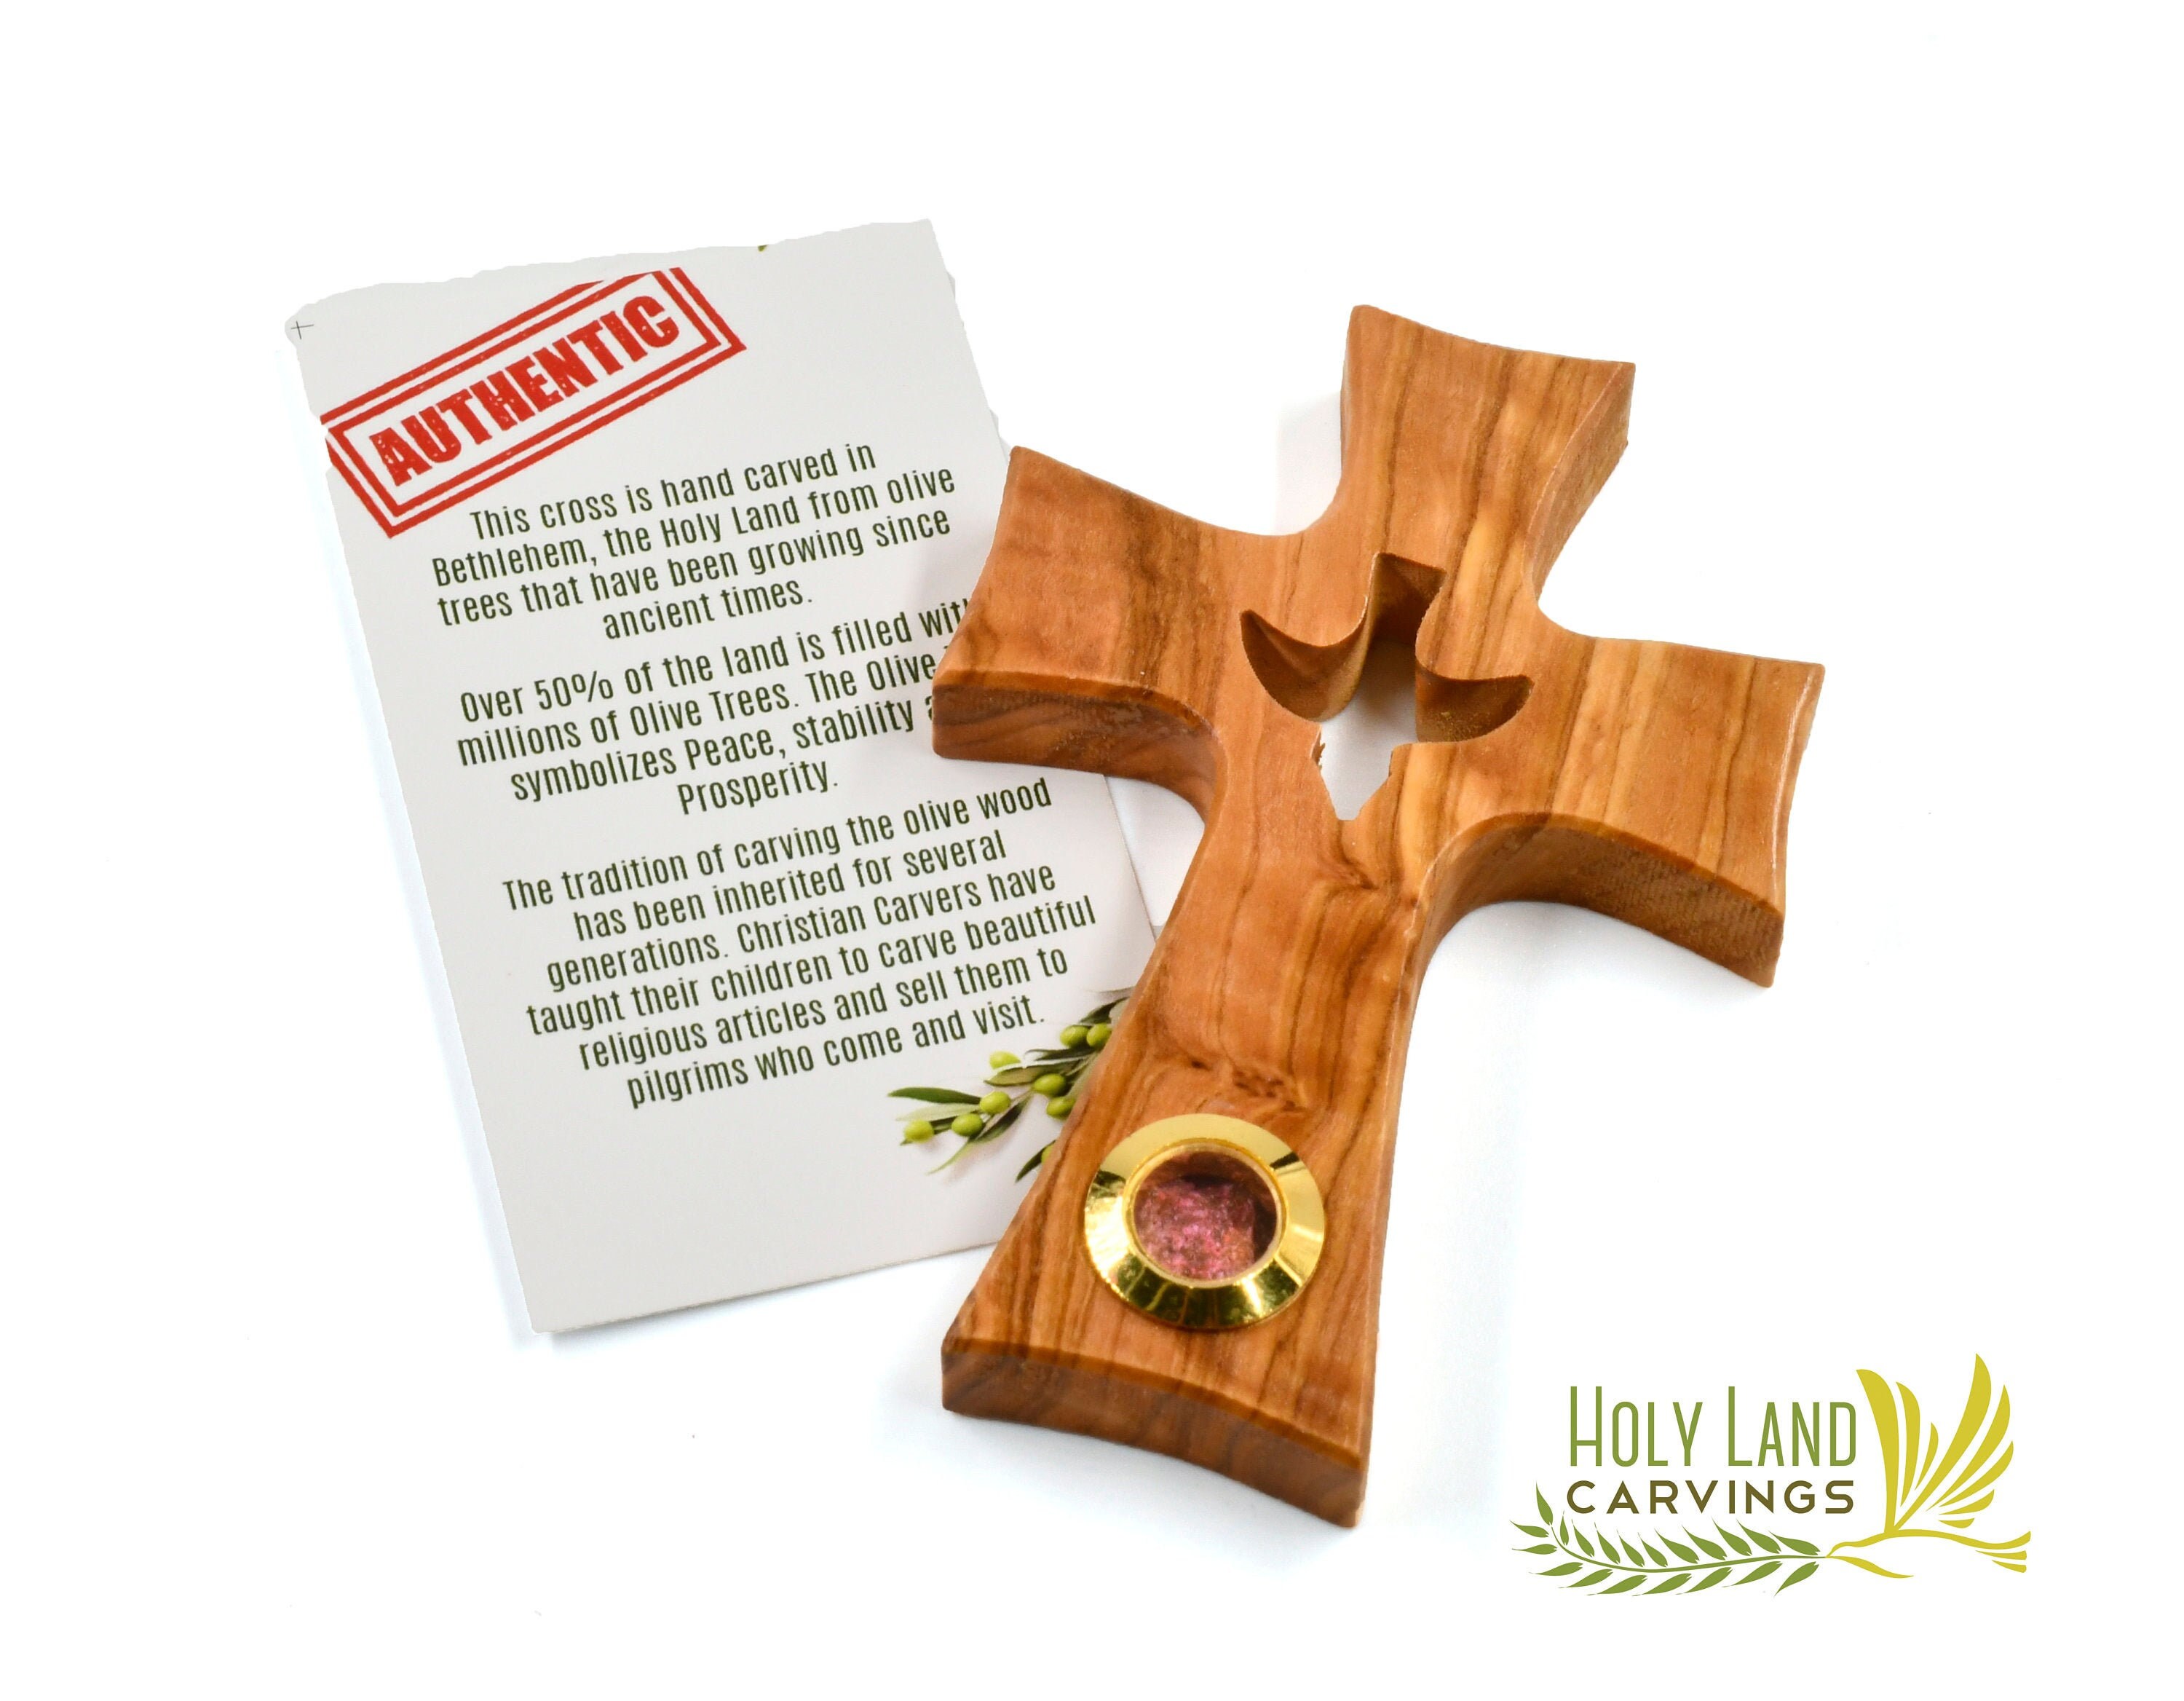 Cruz Espíritu Santo Holy Spirit Cross 13 Inches Wood Madera 13 Pulgadas